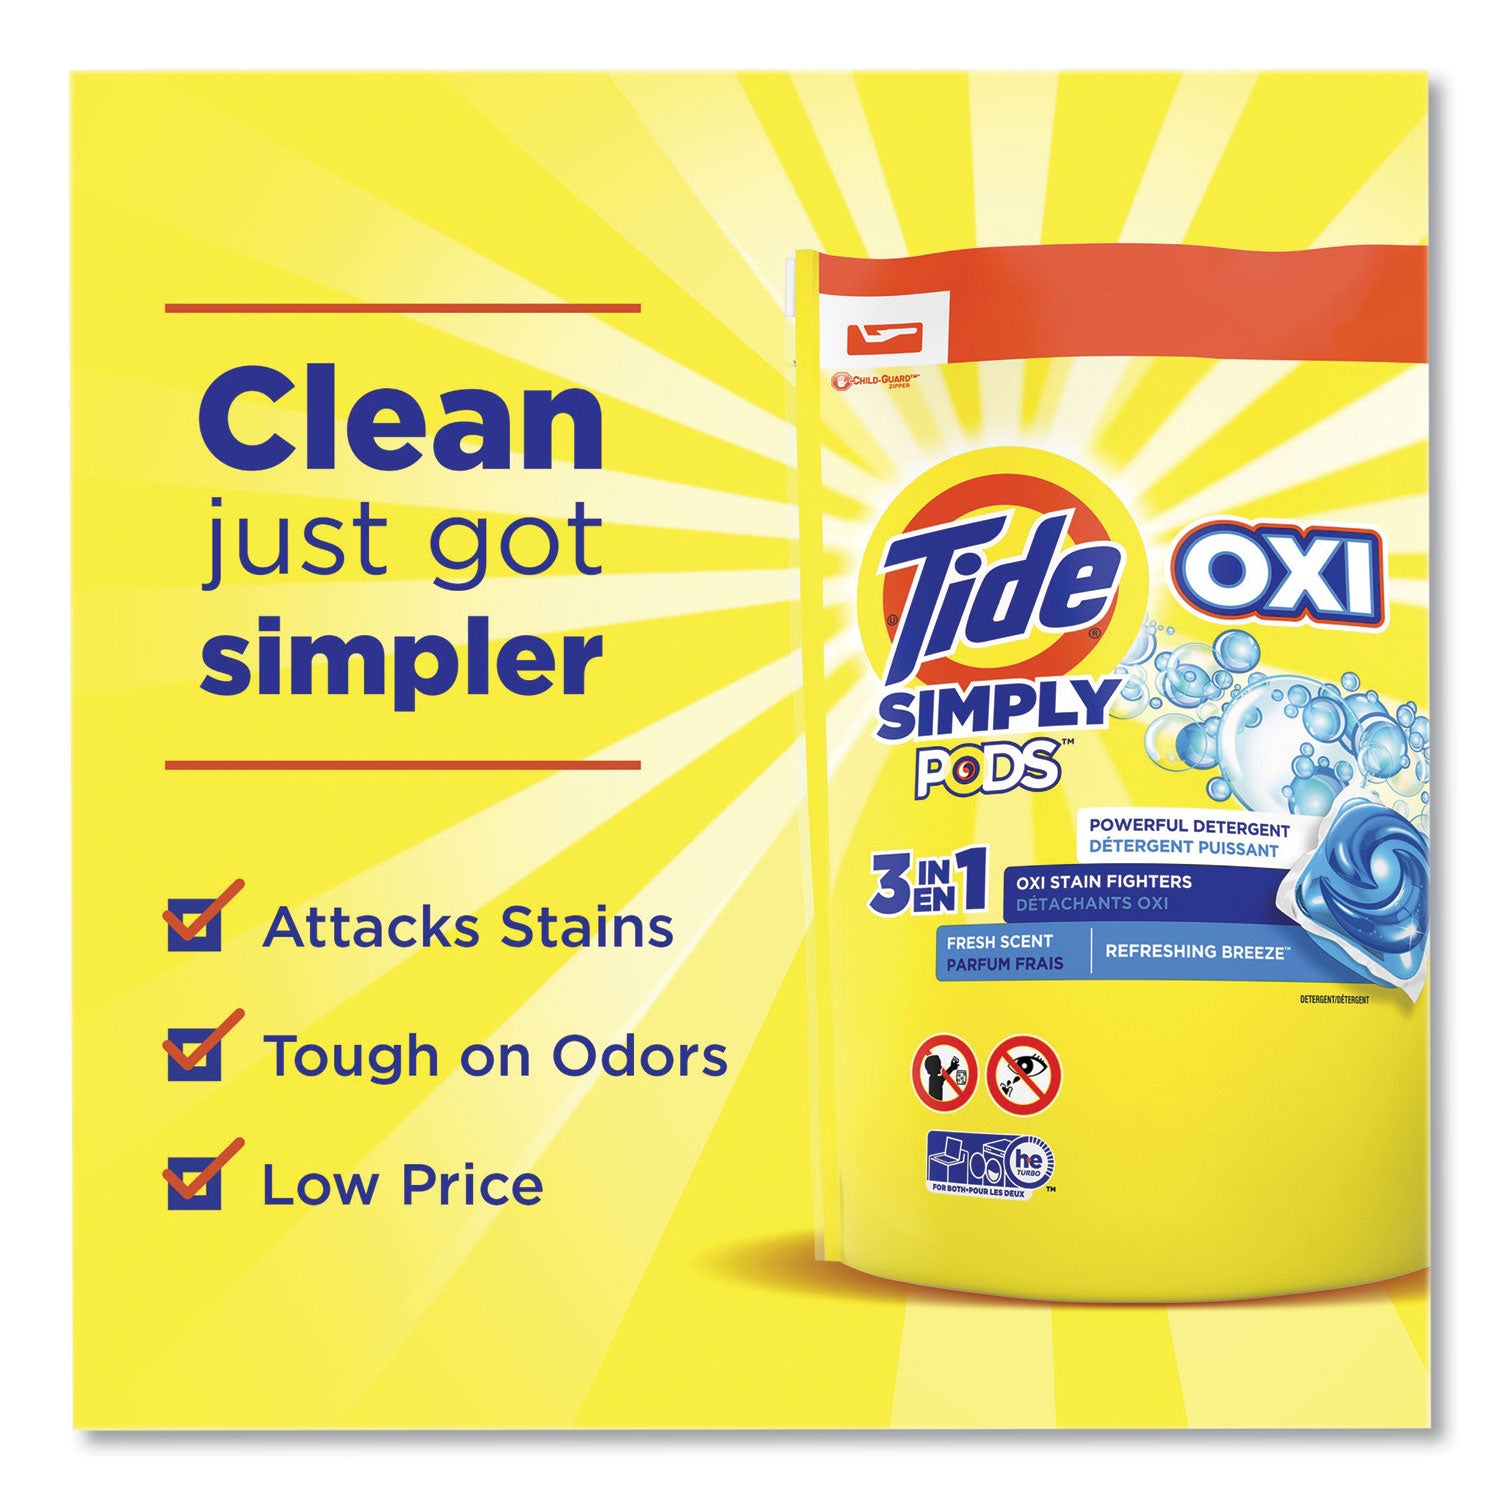 simply-pods-plus-oxi-laundry-detergent-fresh-scent-55-tub_pgc60601 - 5